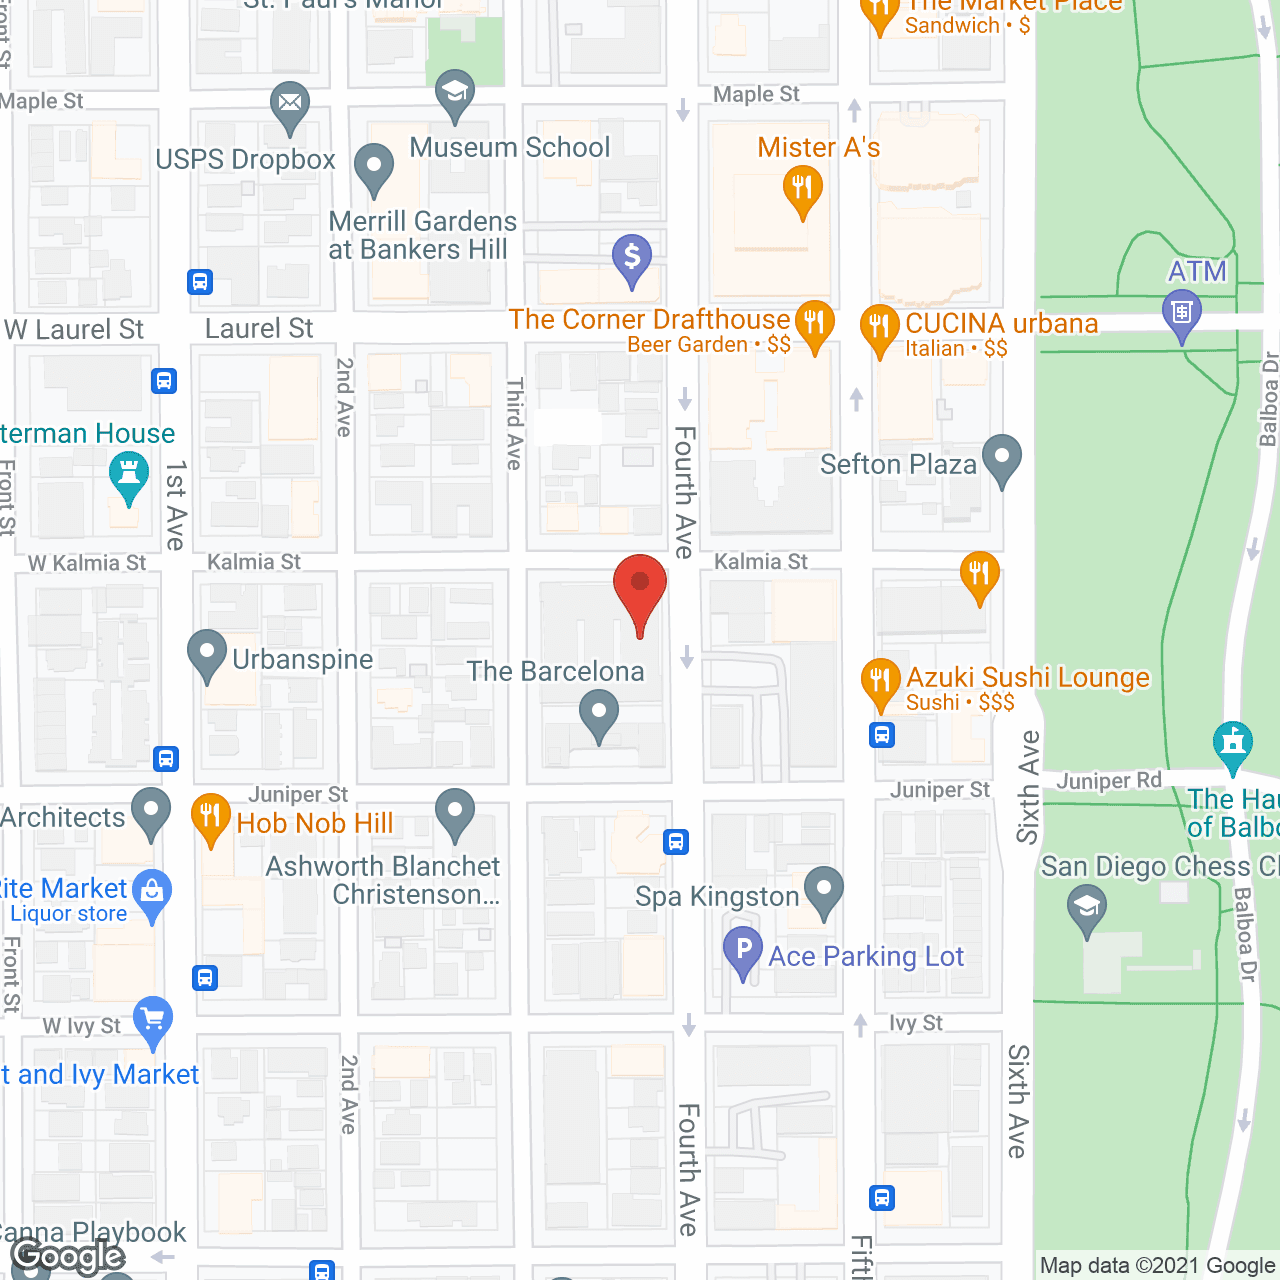 St. Paul's Villa in google map